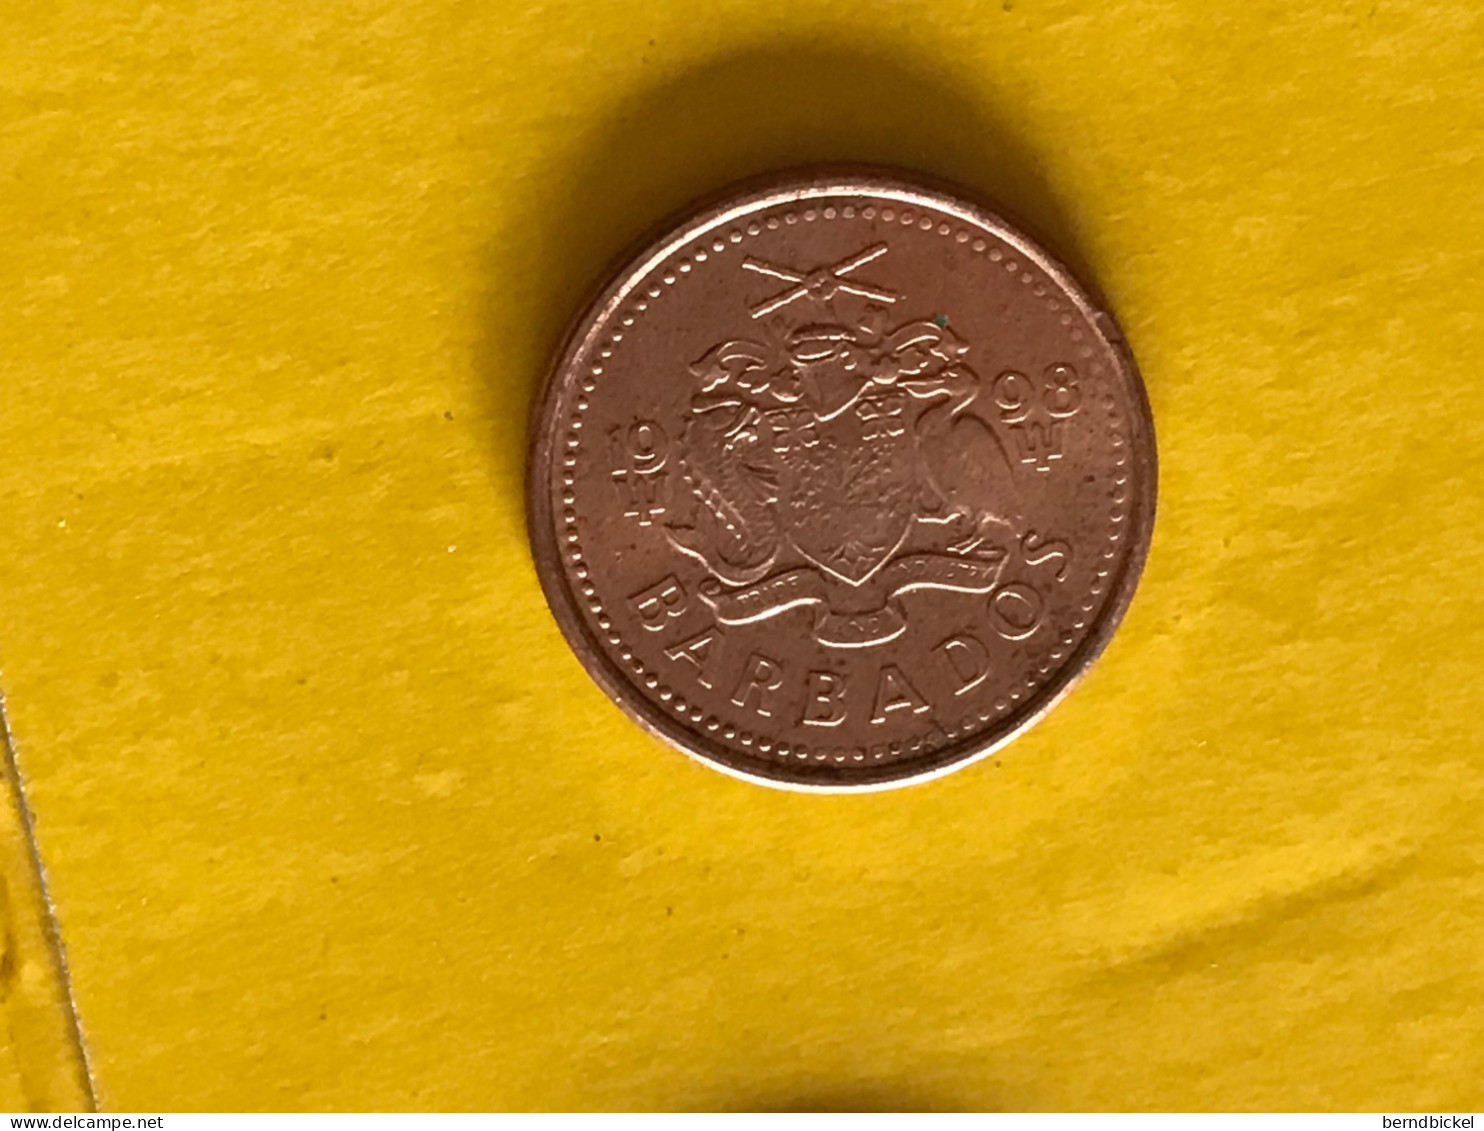 Münze Münzen Umlaufmünze Barbados 1 Cent 1998 - Barbados